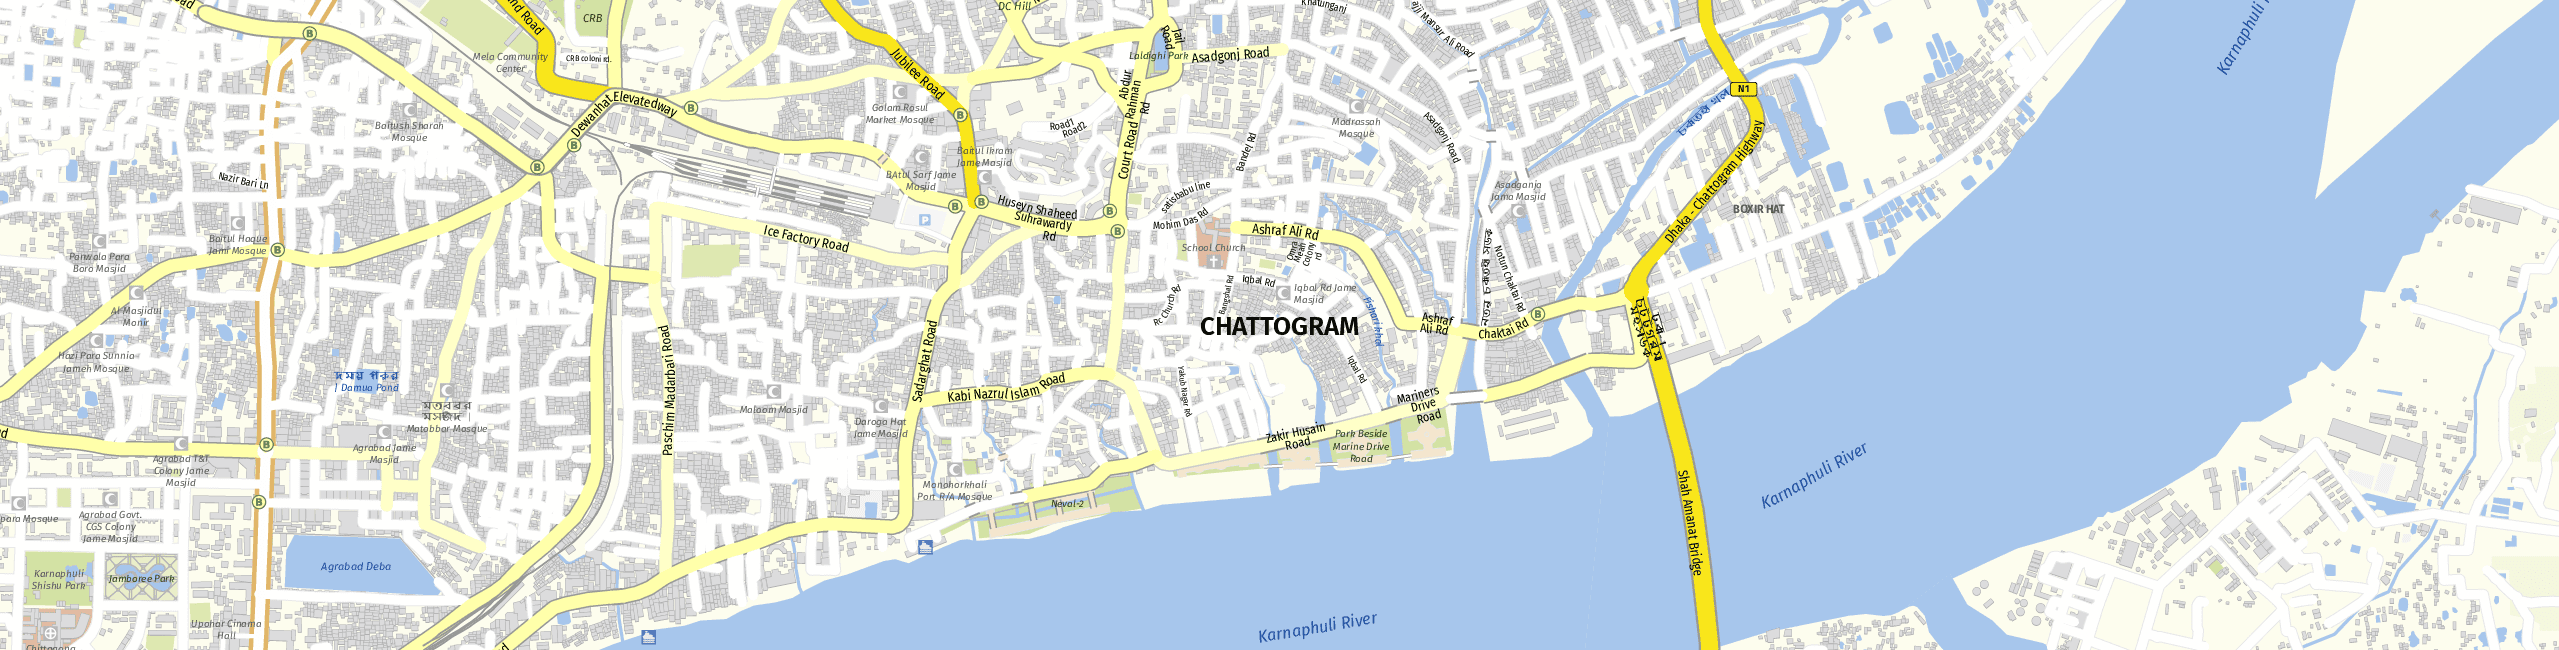 Stadtplan Chittagong zum Downloaden.